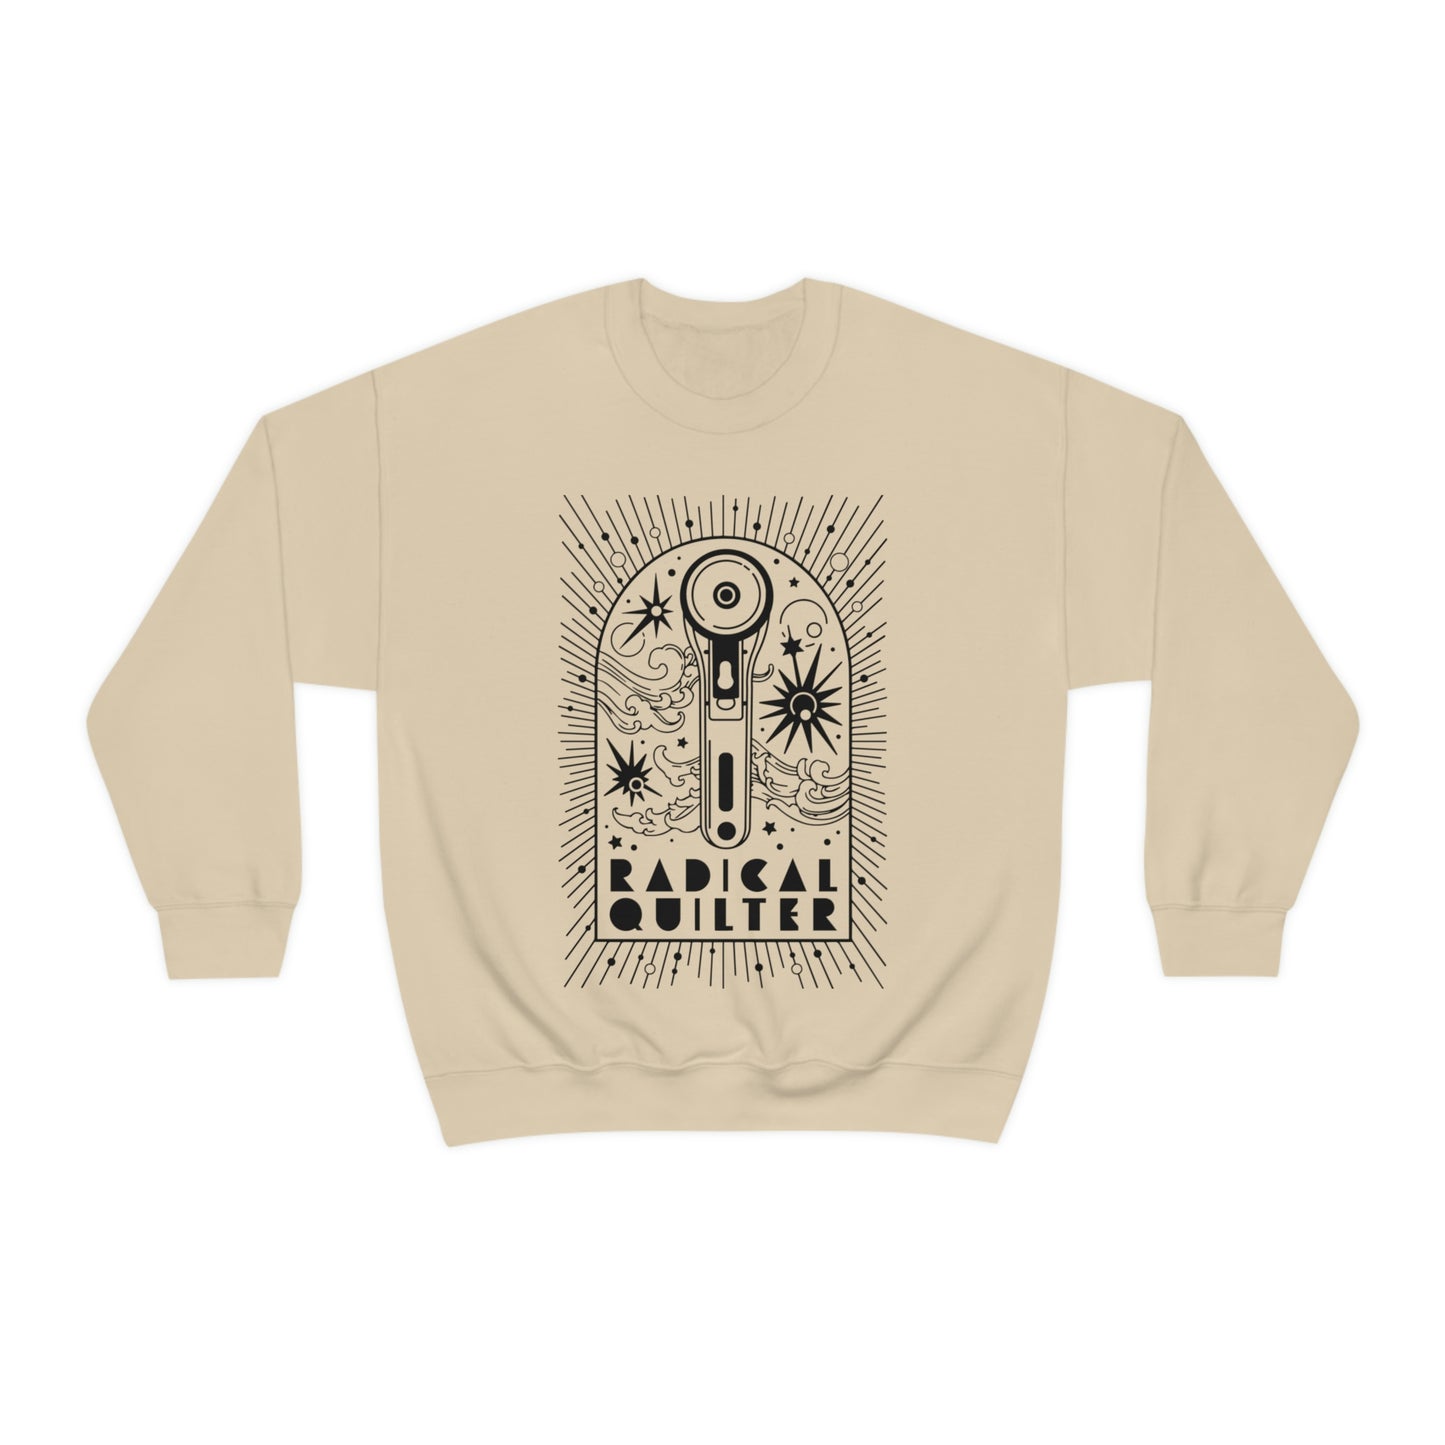 Radical Quilter Crewneck Sweatshirt (Black Design)